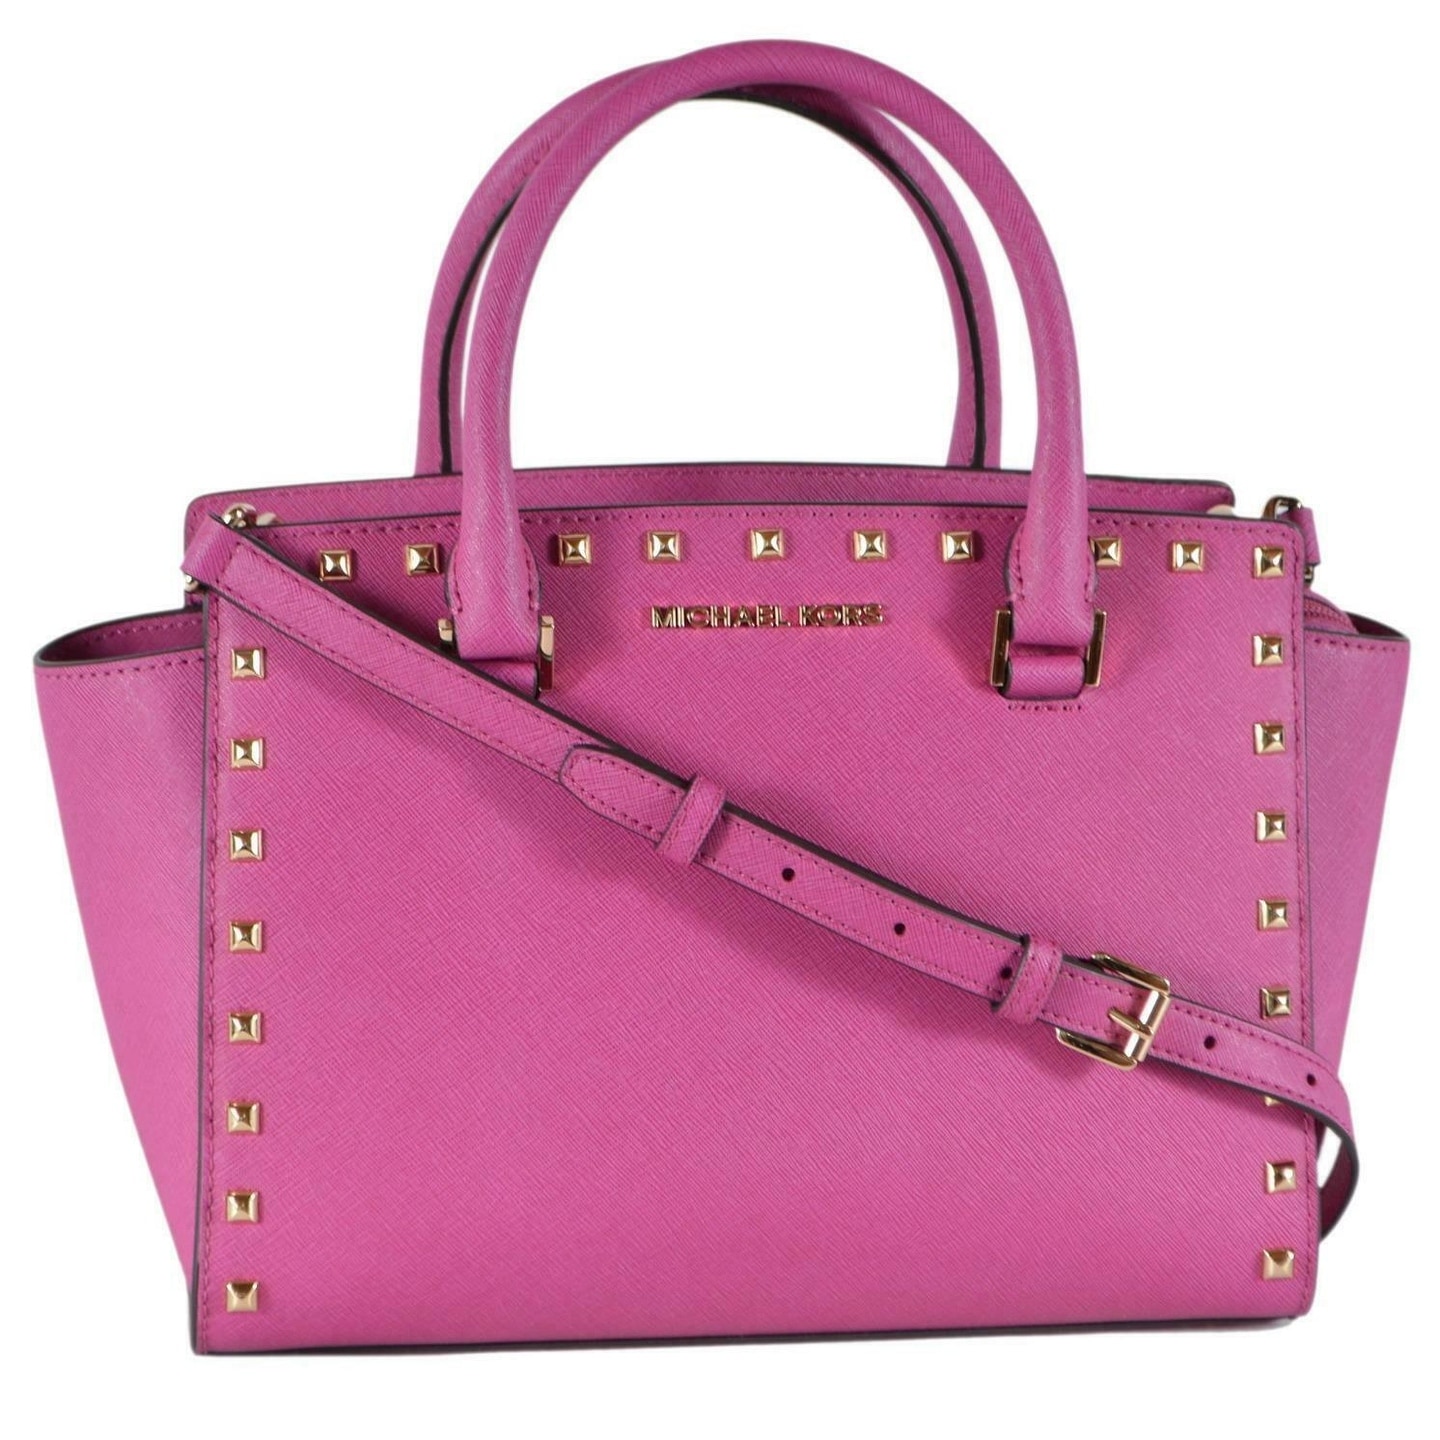 MK handbags pink